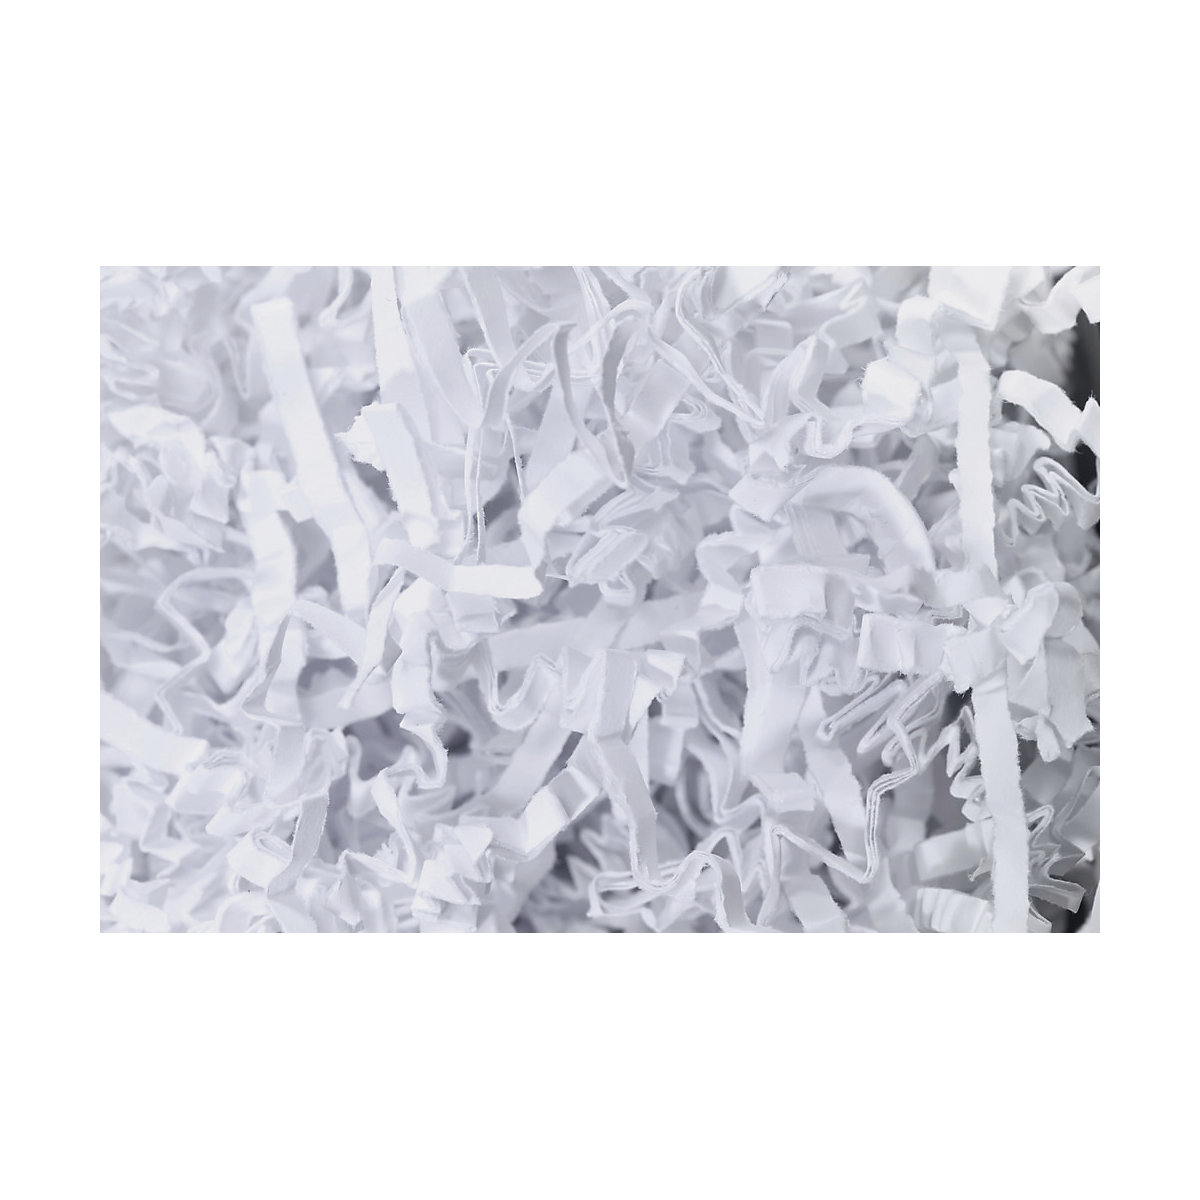 Materiale di riempimento in carta SizzlePak, 1,25 kg, capacità 40 l, bianco, a partire da 10 pz.